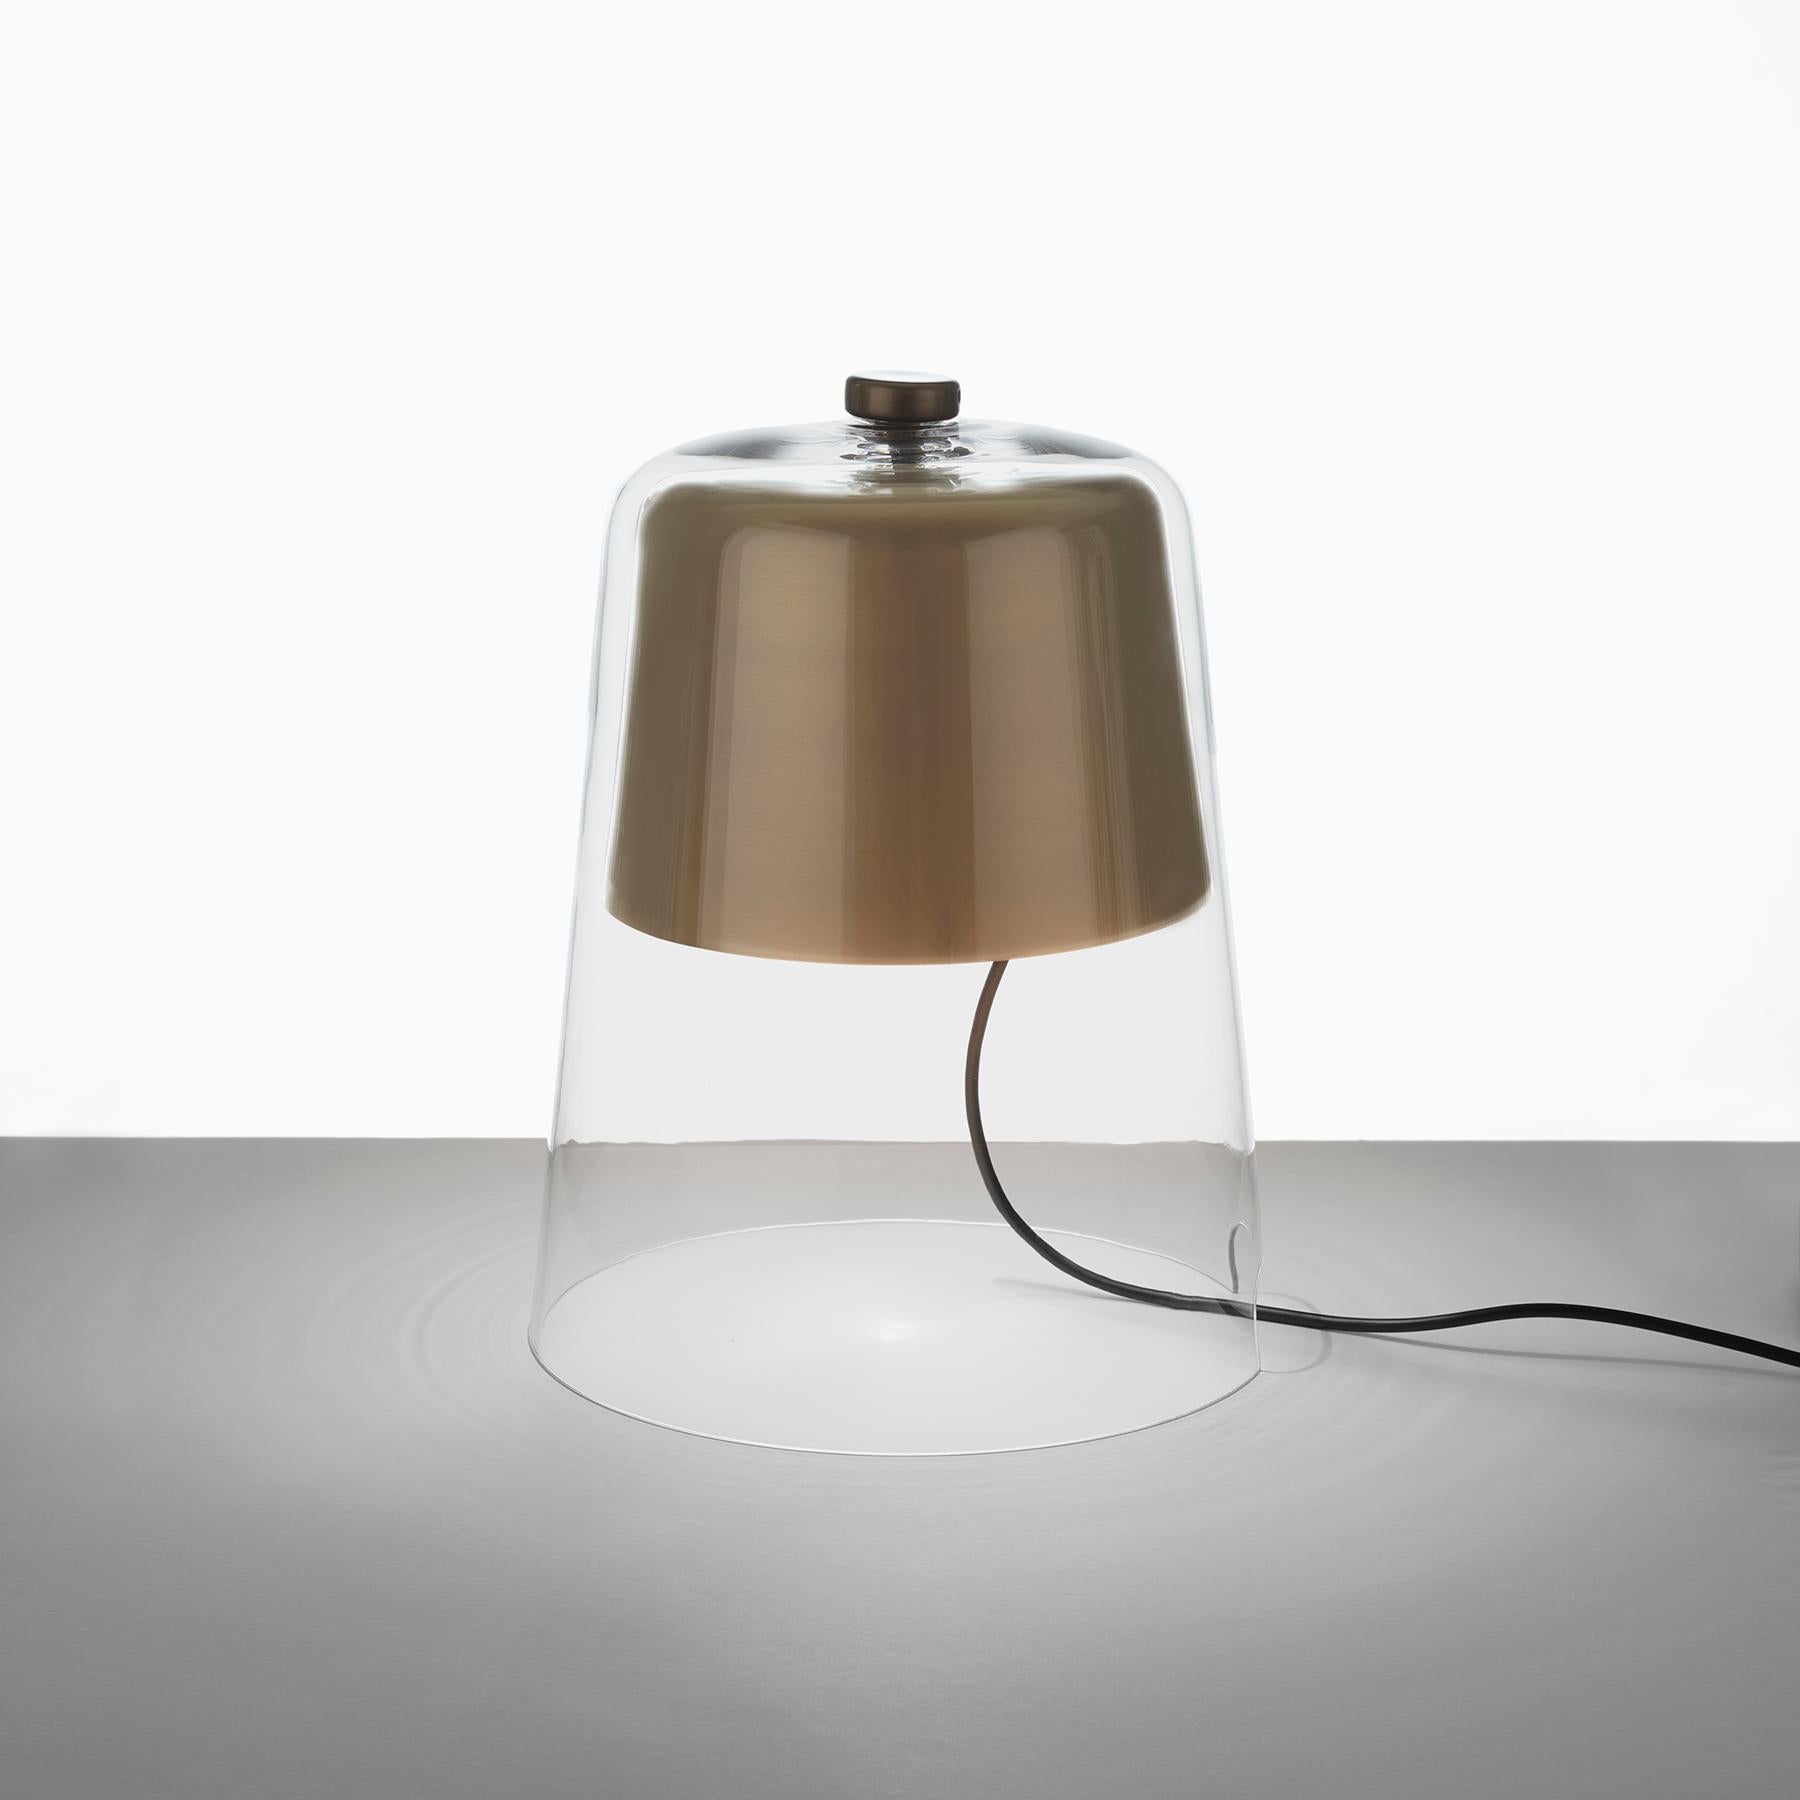 Italian Sam Hecht Table Lamp 'Semplice' Satin Gold Glaze by Oluce For Sale